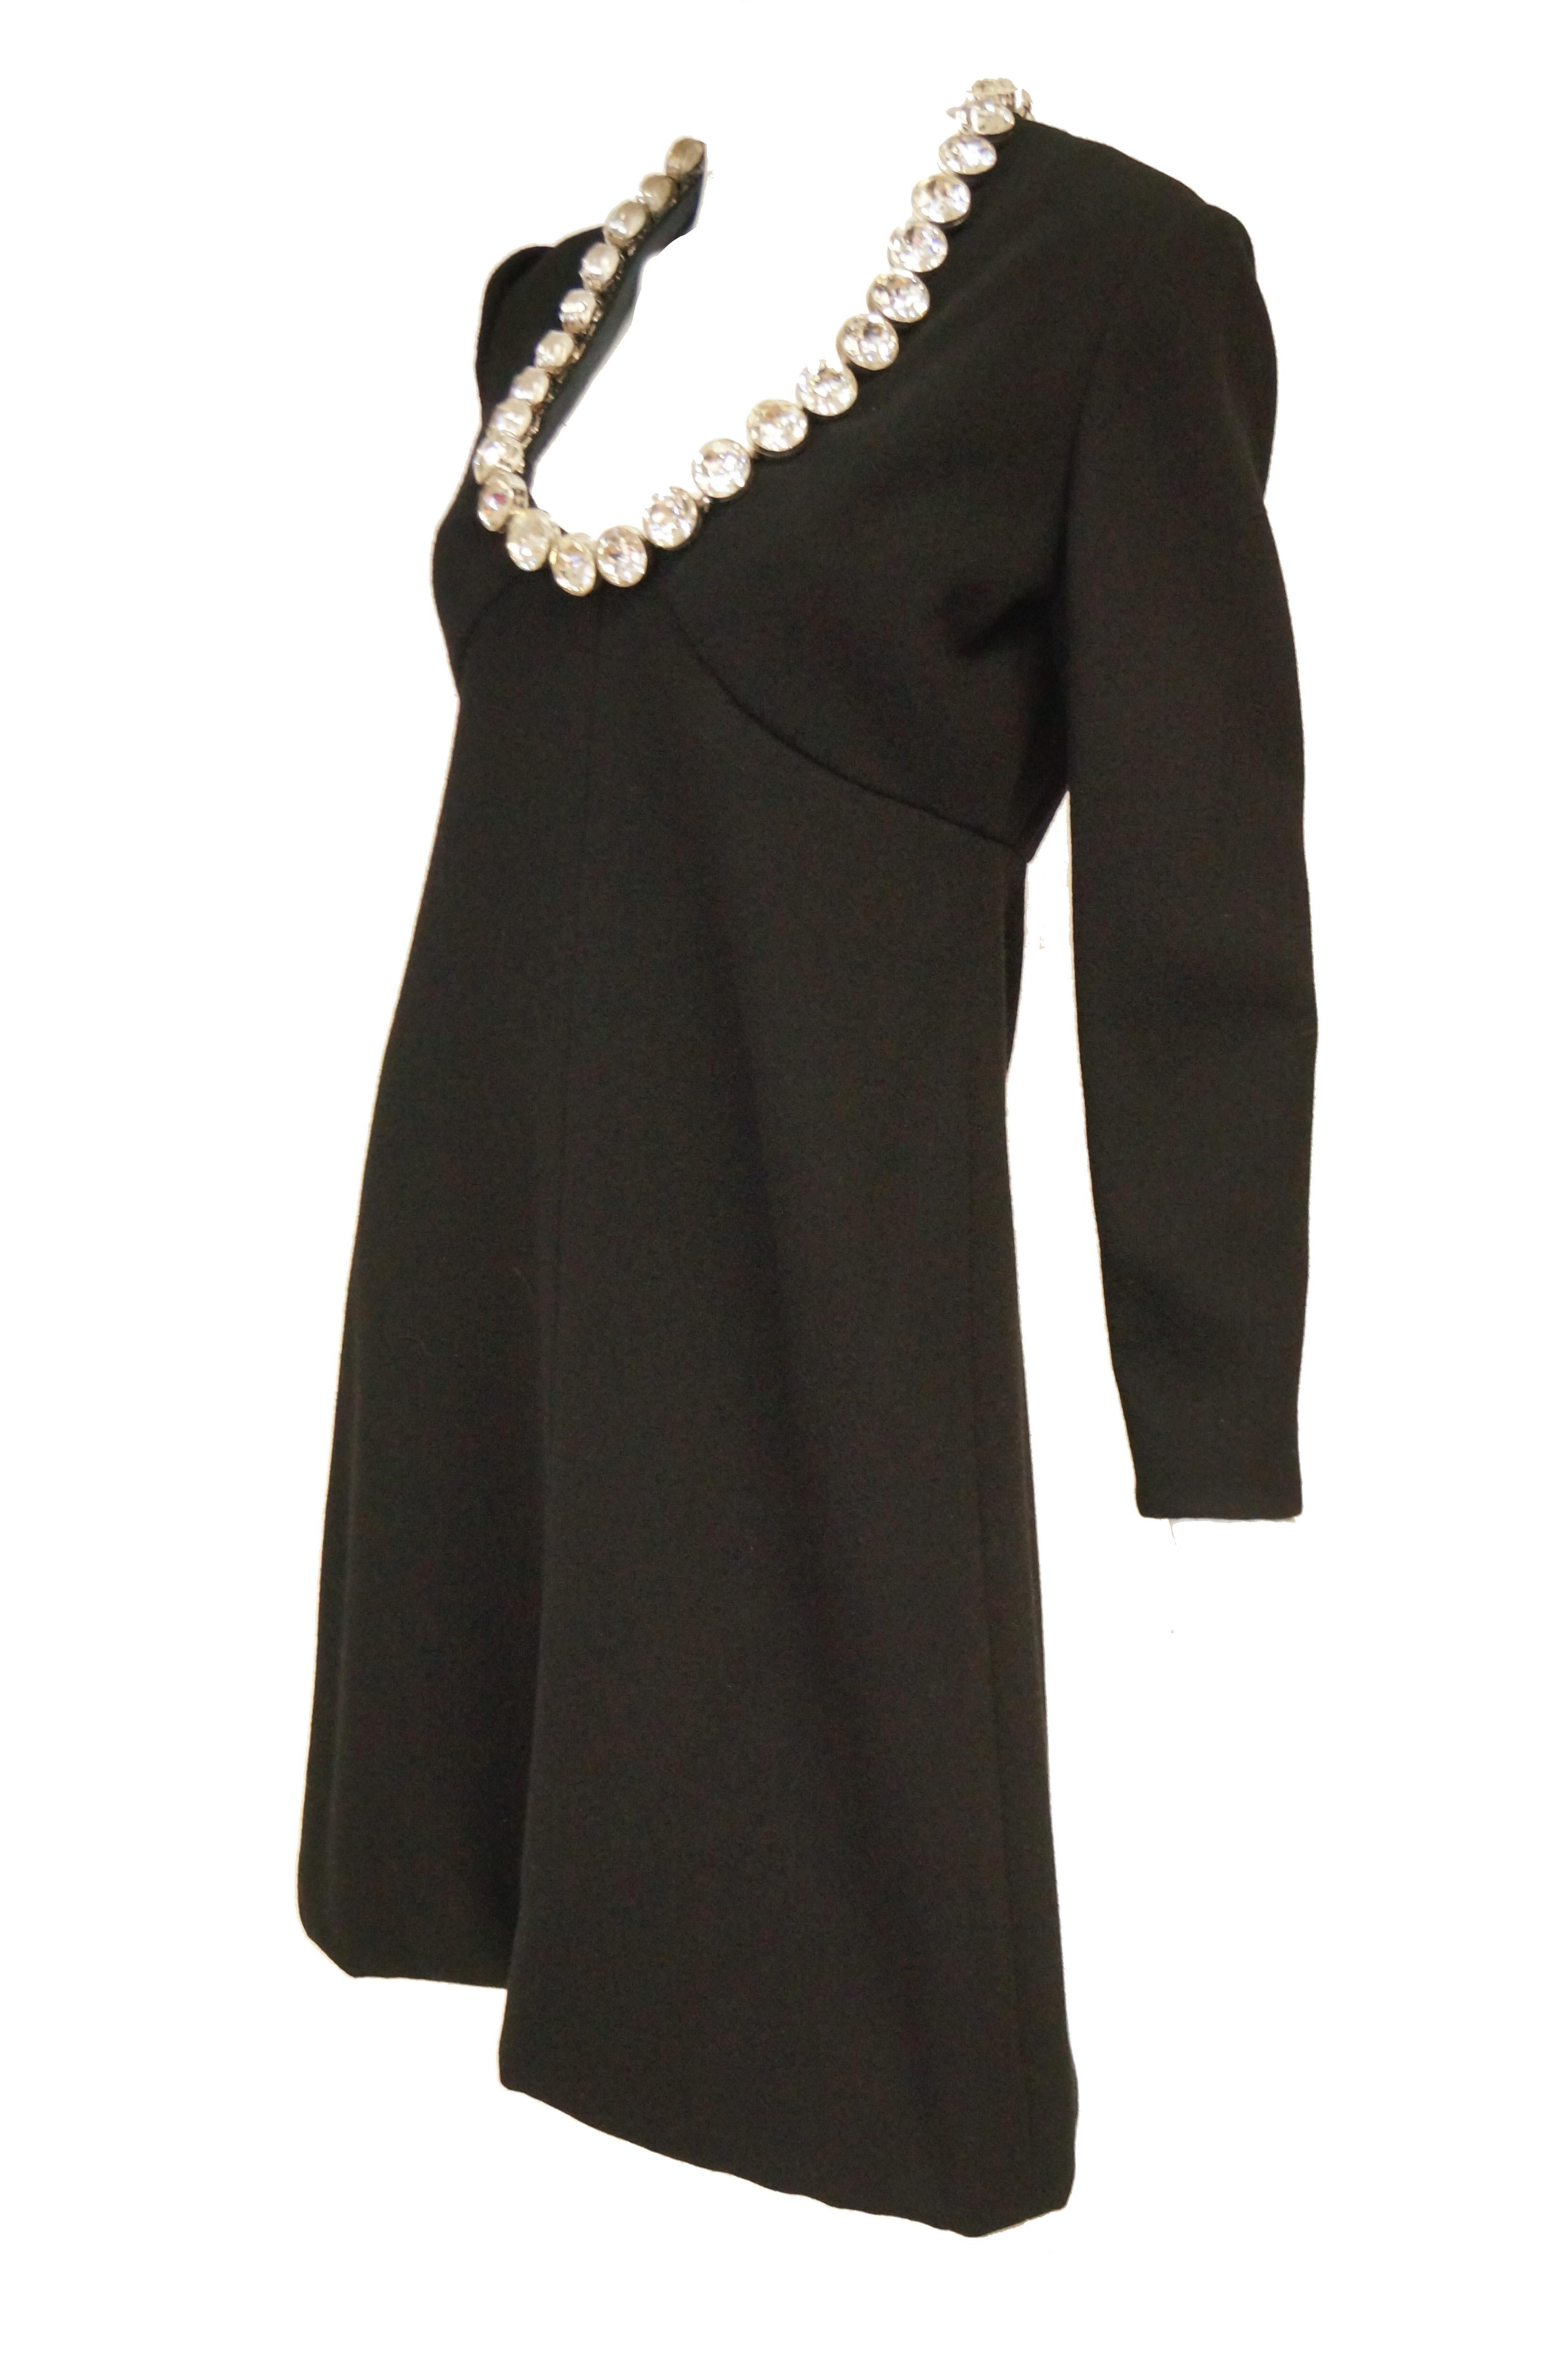 1960s Donald Brooks Black Cocktail Dress with Riviera Rhinestone Neckline For Sale 2